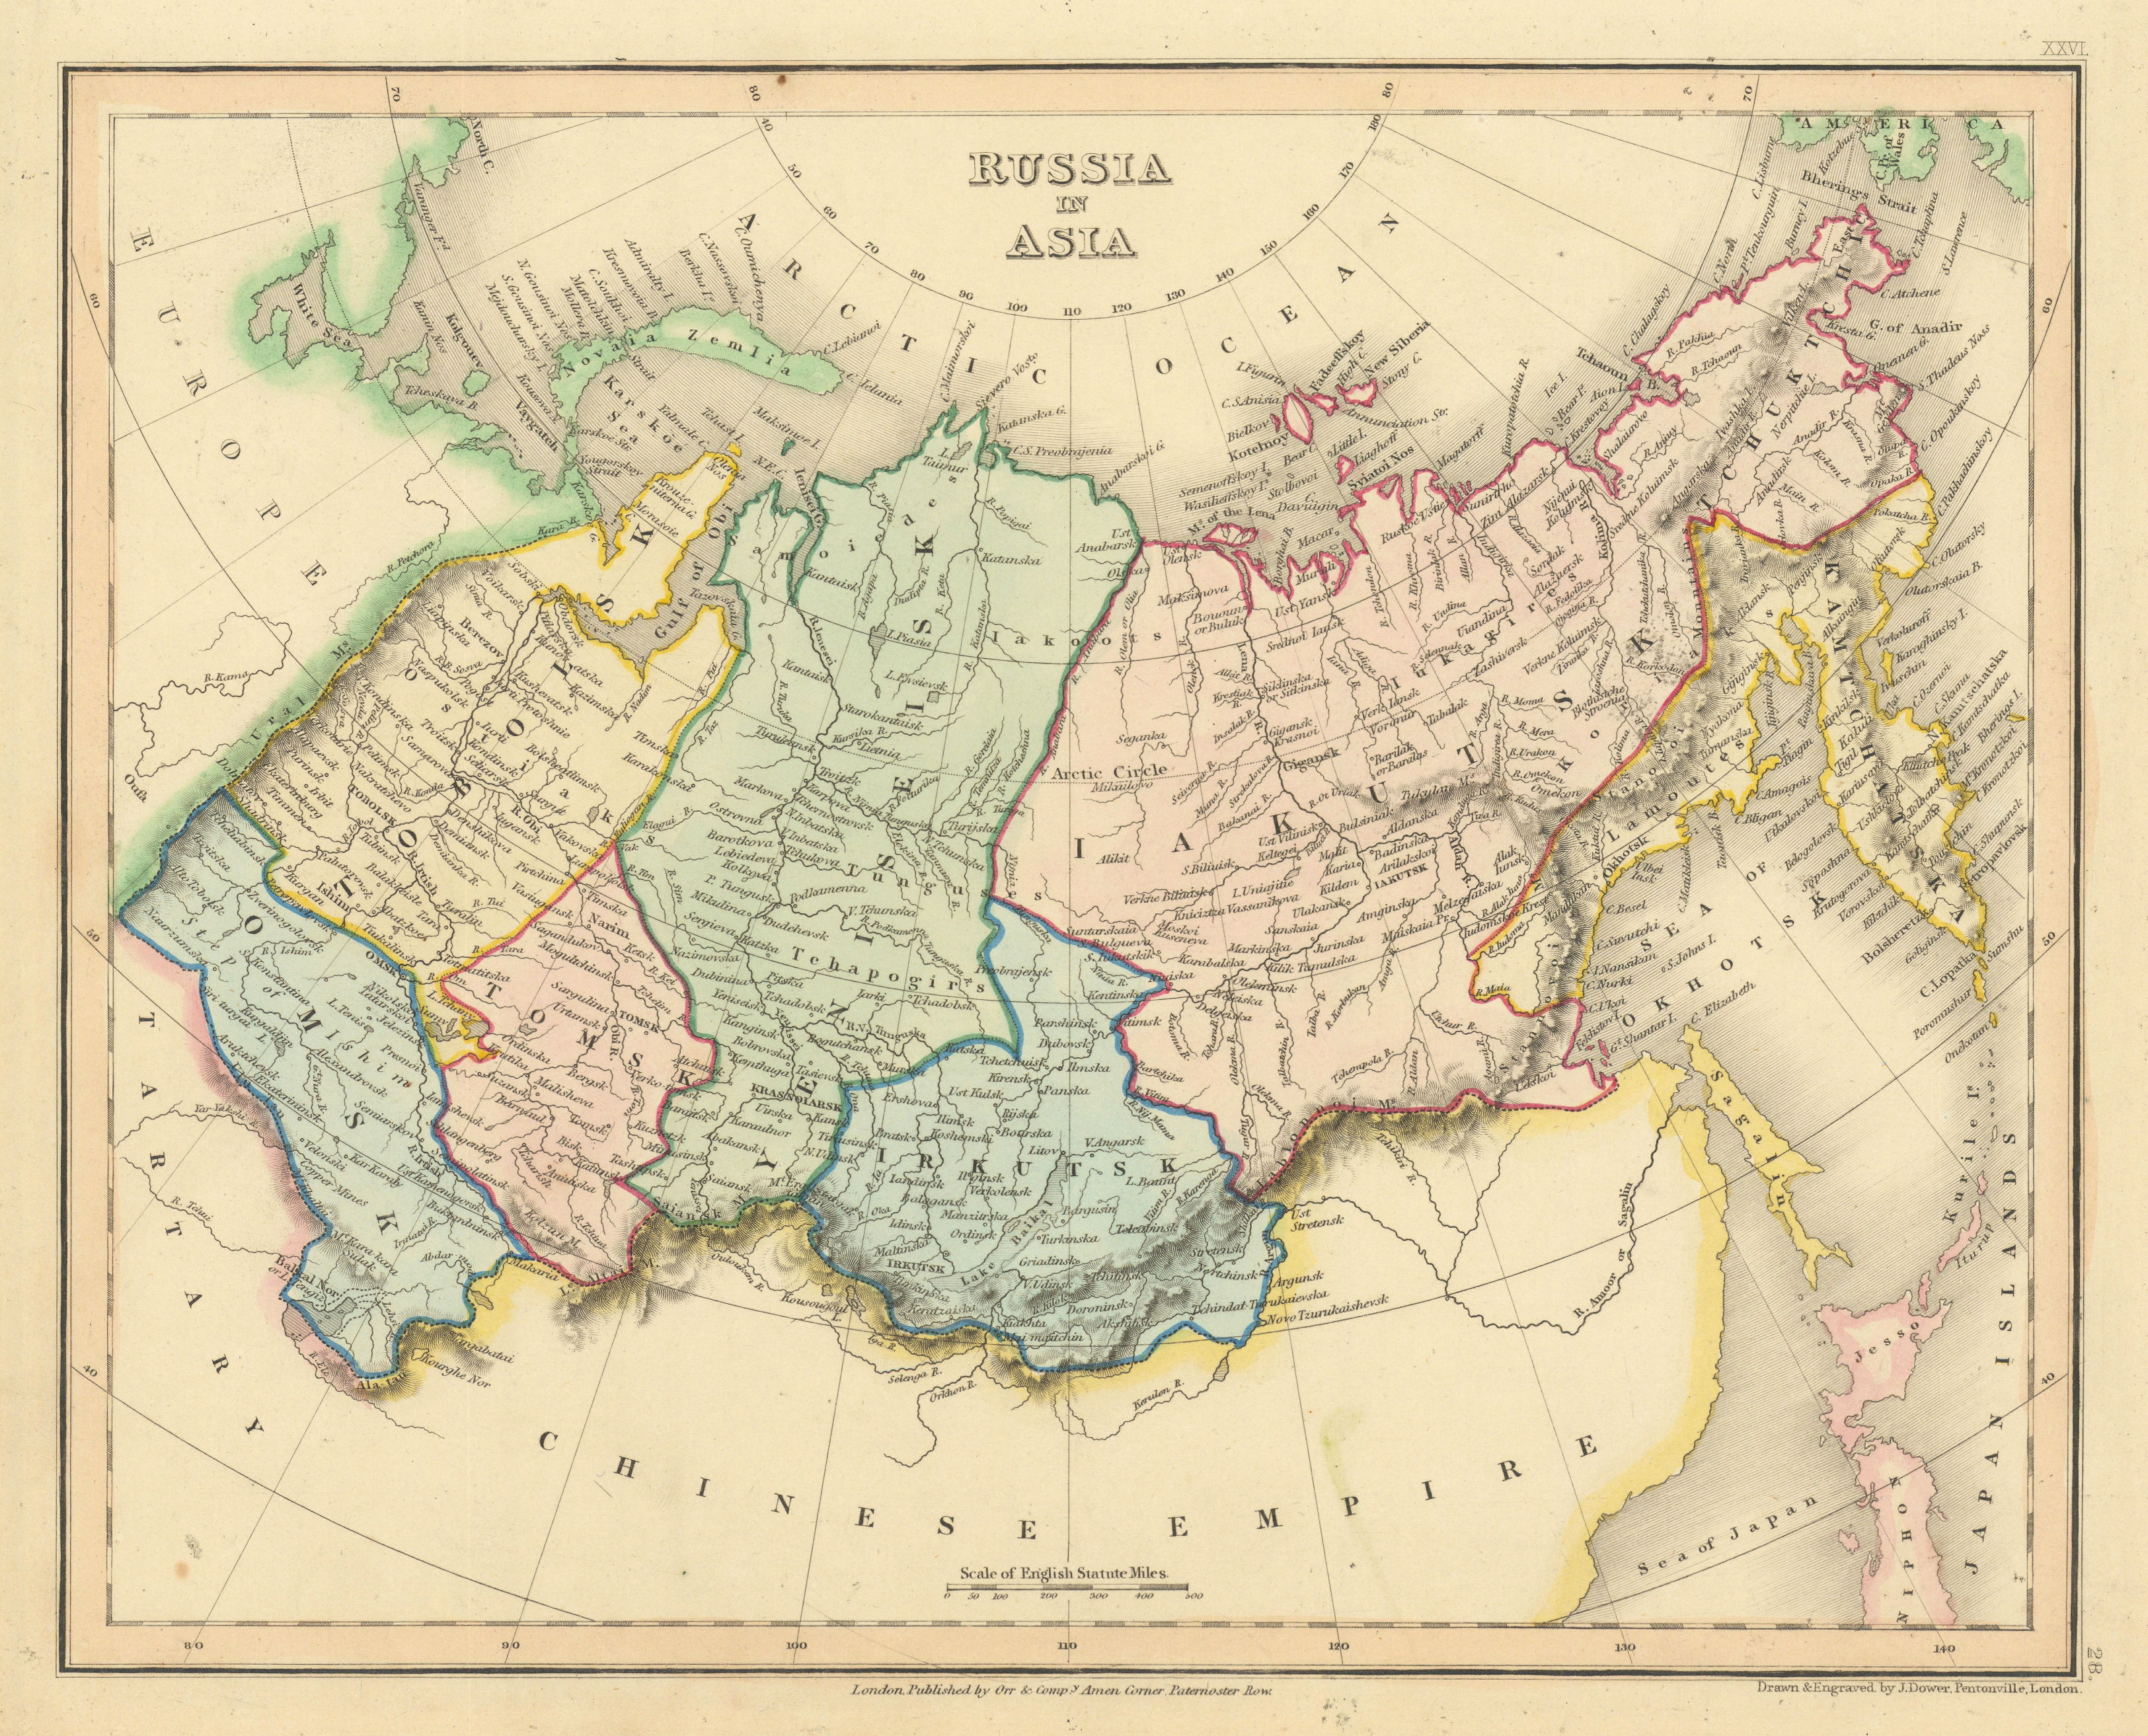 Associate Product Russia in Asia by John Dower. Irkutsk Iakutsk Kamchatka Tomsk Yeniseisk 1845 map